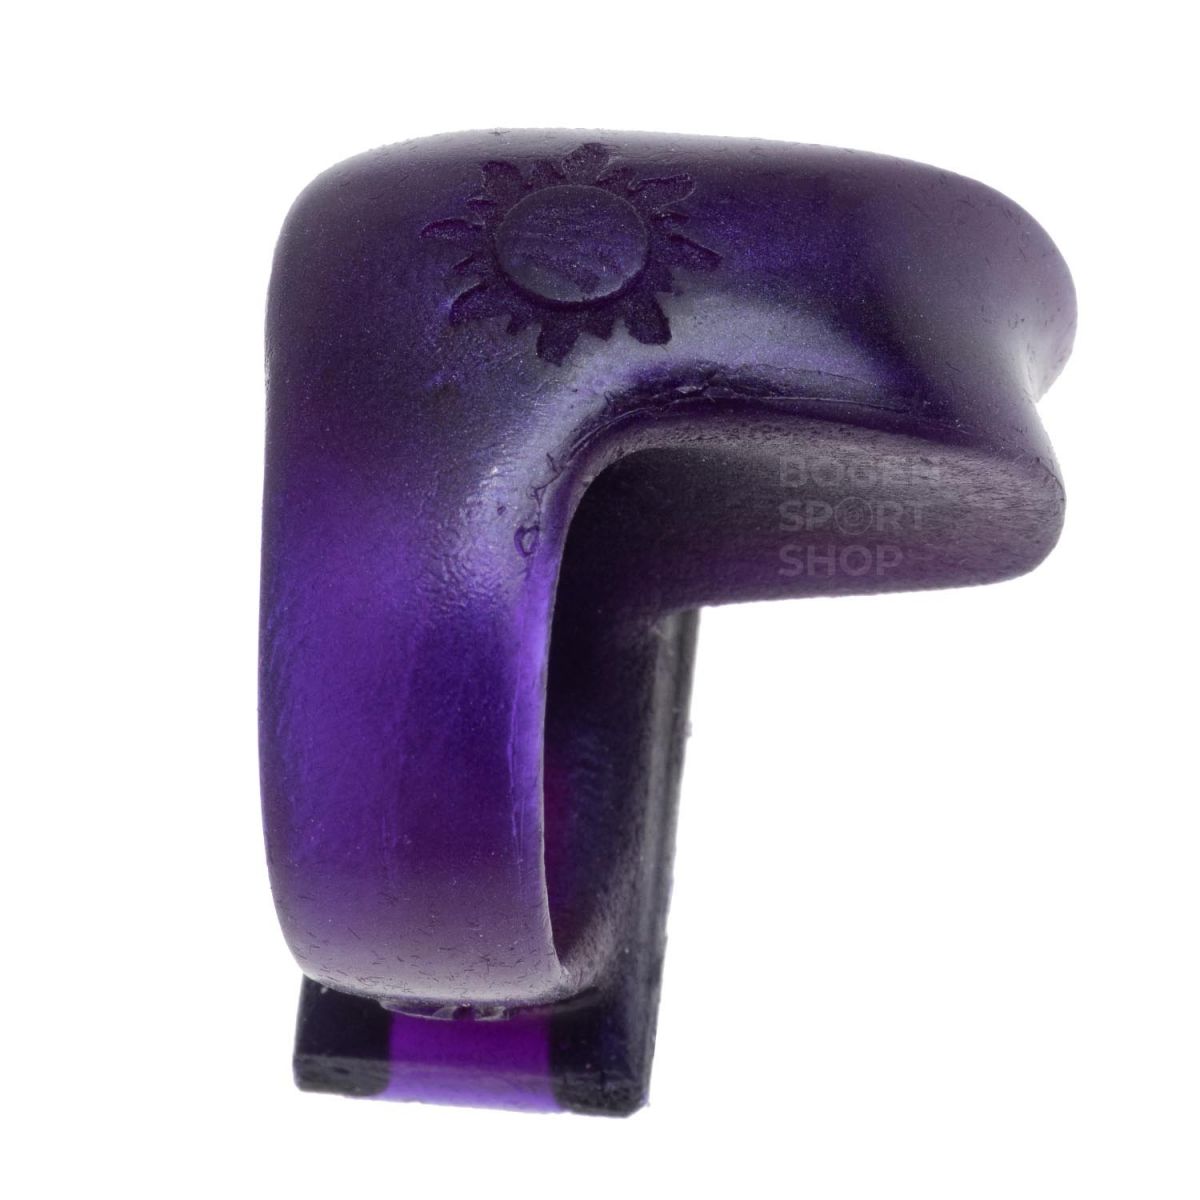 Fairweather Tab Finger Spacer - Purple - CLOSEOUT